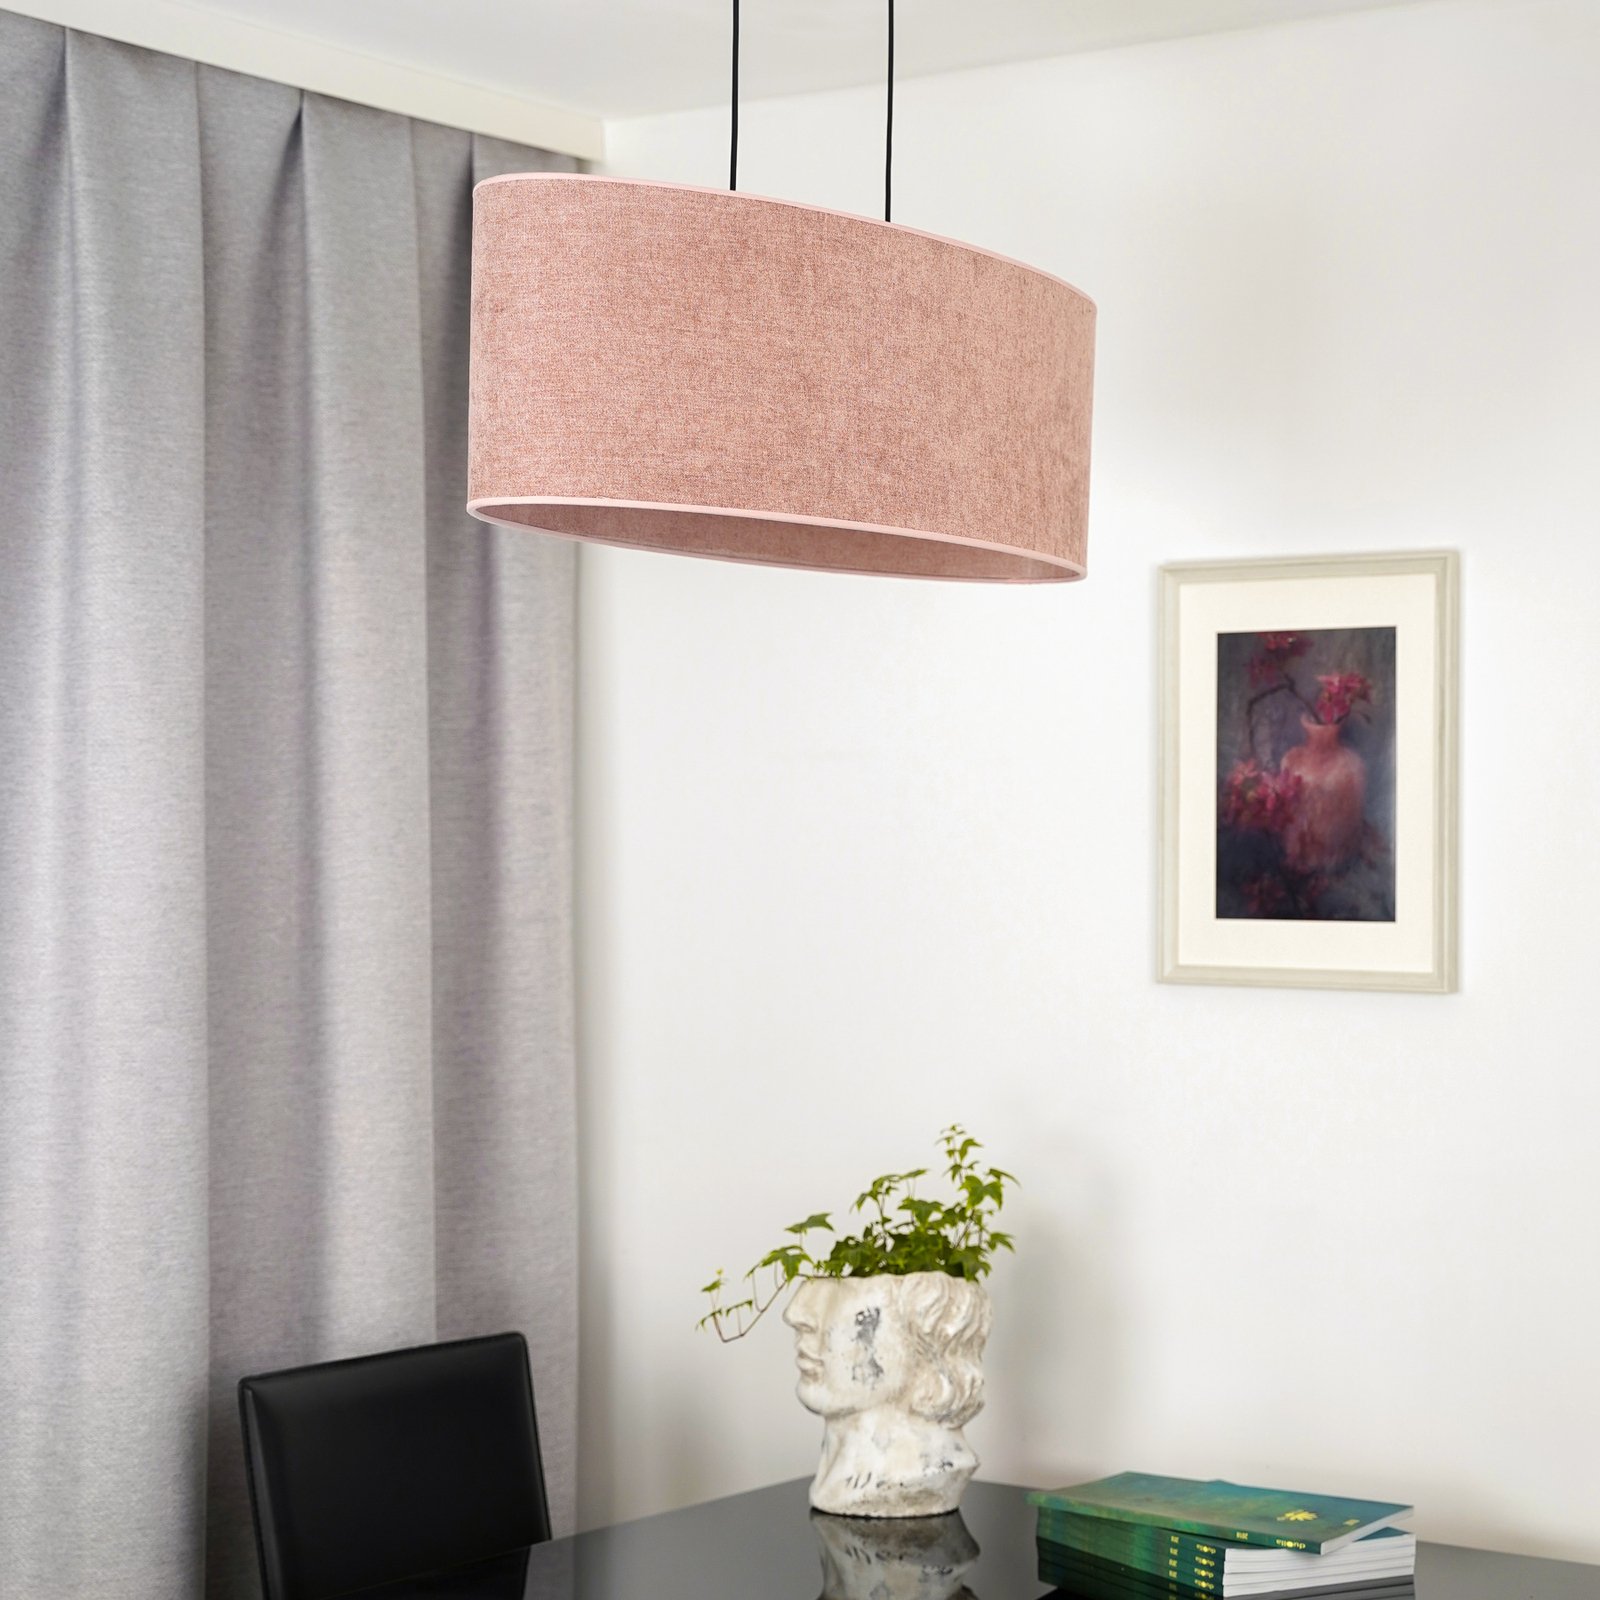 Euluna hanging light Celine, pink, chenille fabric, length 80 cm